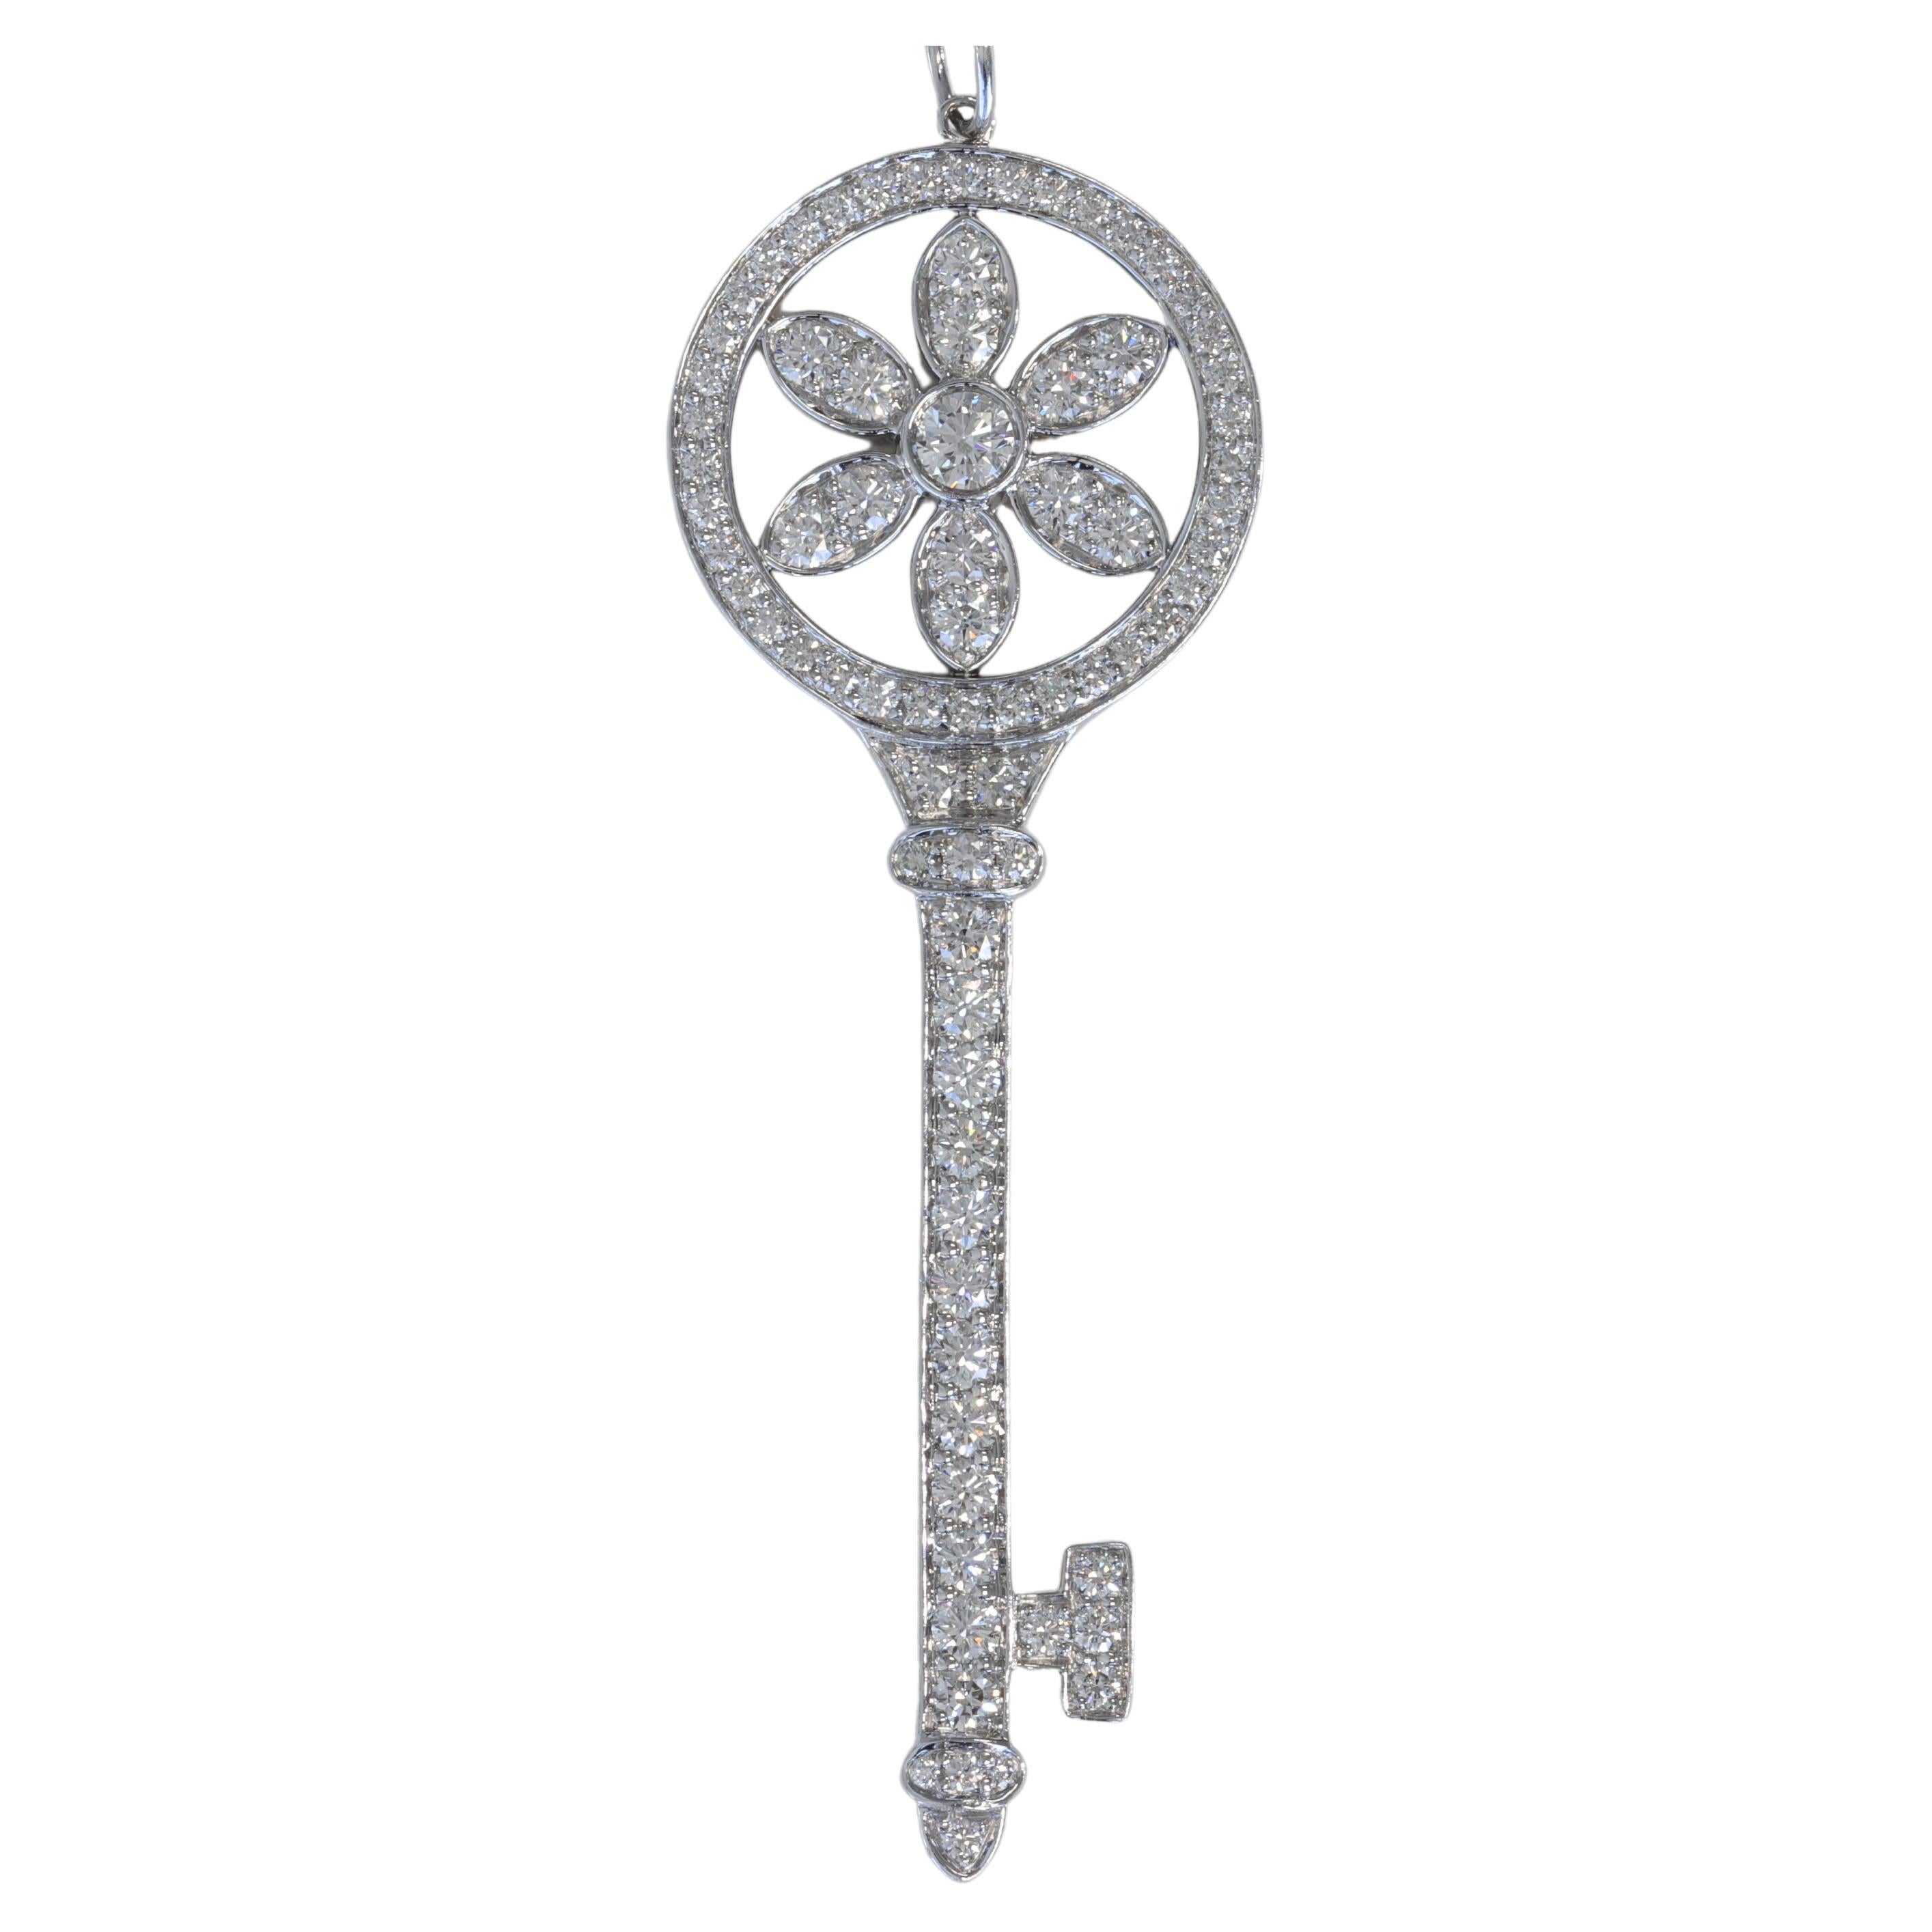 Tiffany & Co. Large Daisy Diamond & Platinum Key Pendant Long Oval Link Chain